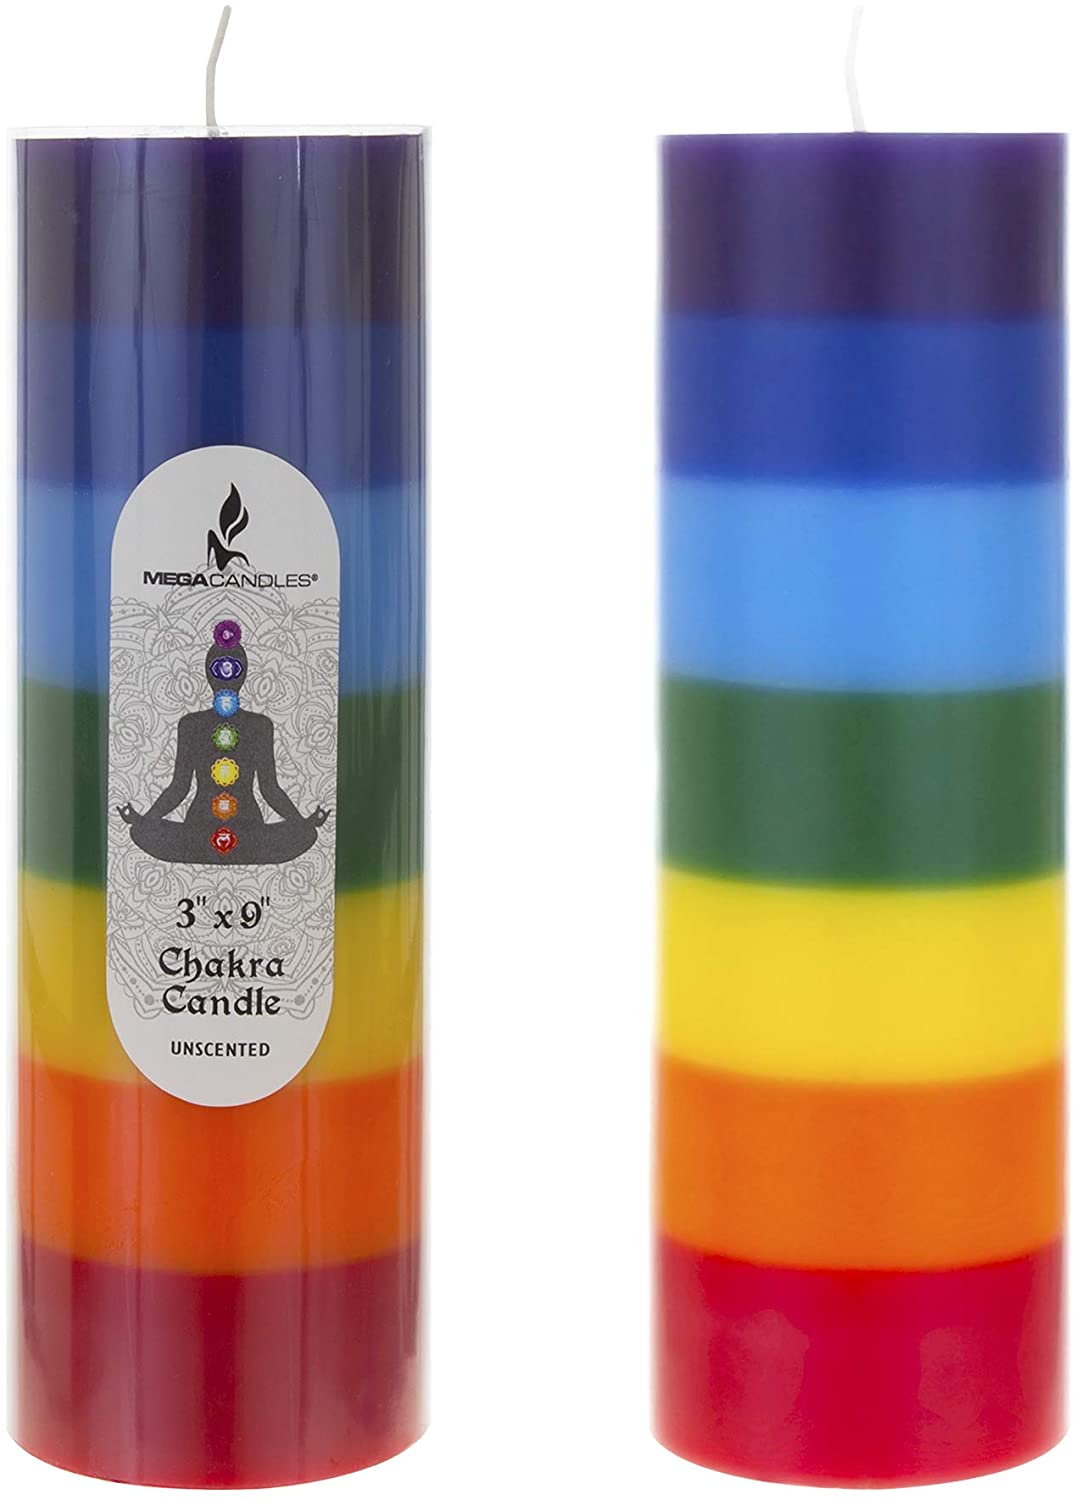 Skinnydip Sweet Rainbow Candle for Women